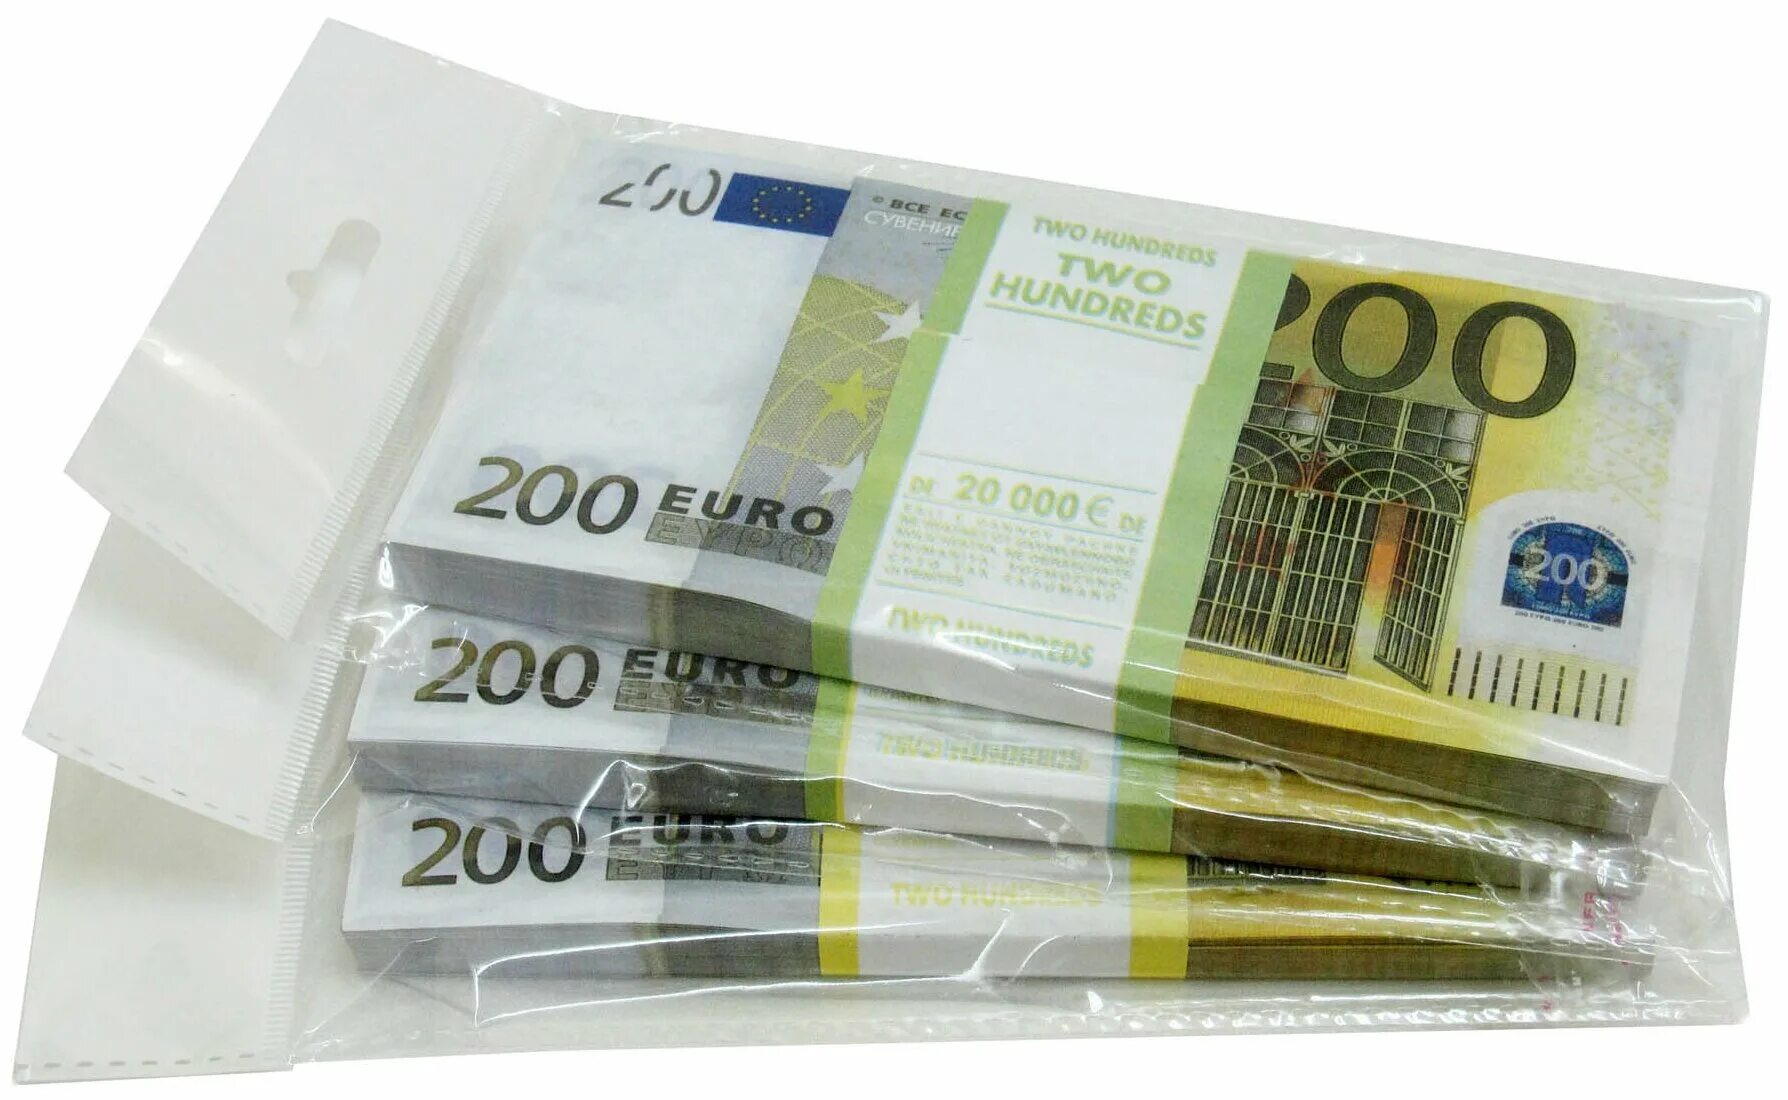 Пошлина свыше 200 евро. Сувенир пачка купюр "200 евро" 770166. Пачка купюр 100 евро. Деньги евро 200. Купюры по 200 евро.